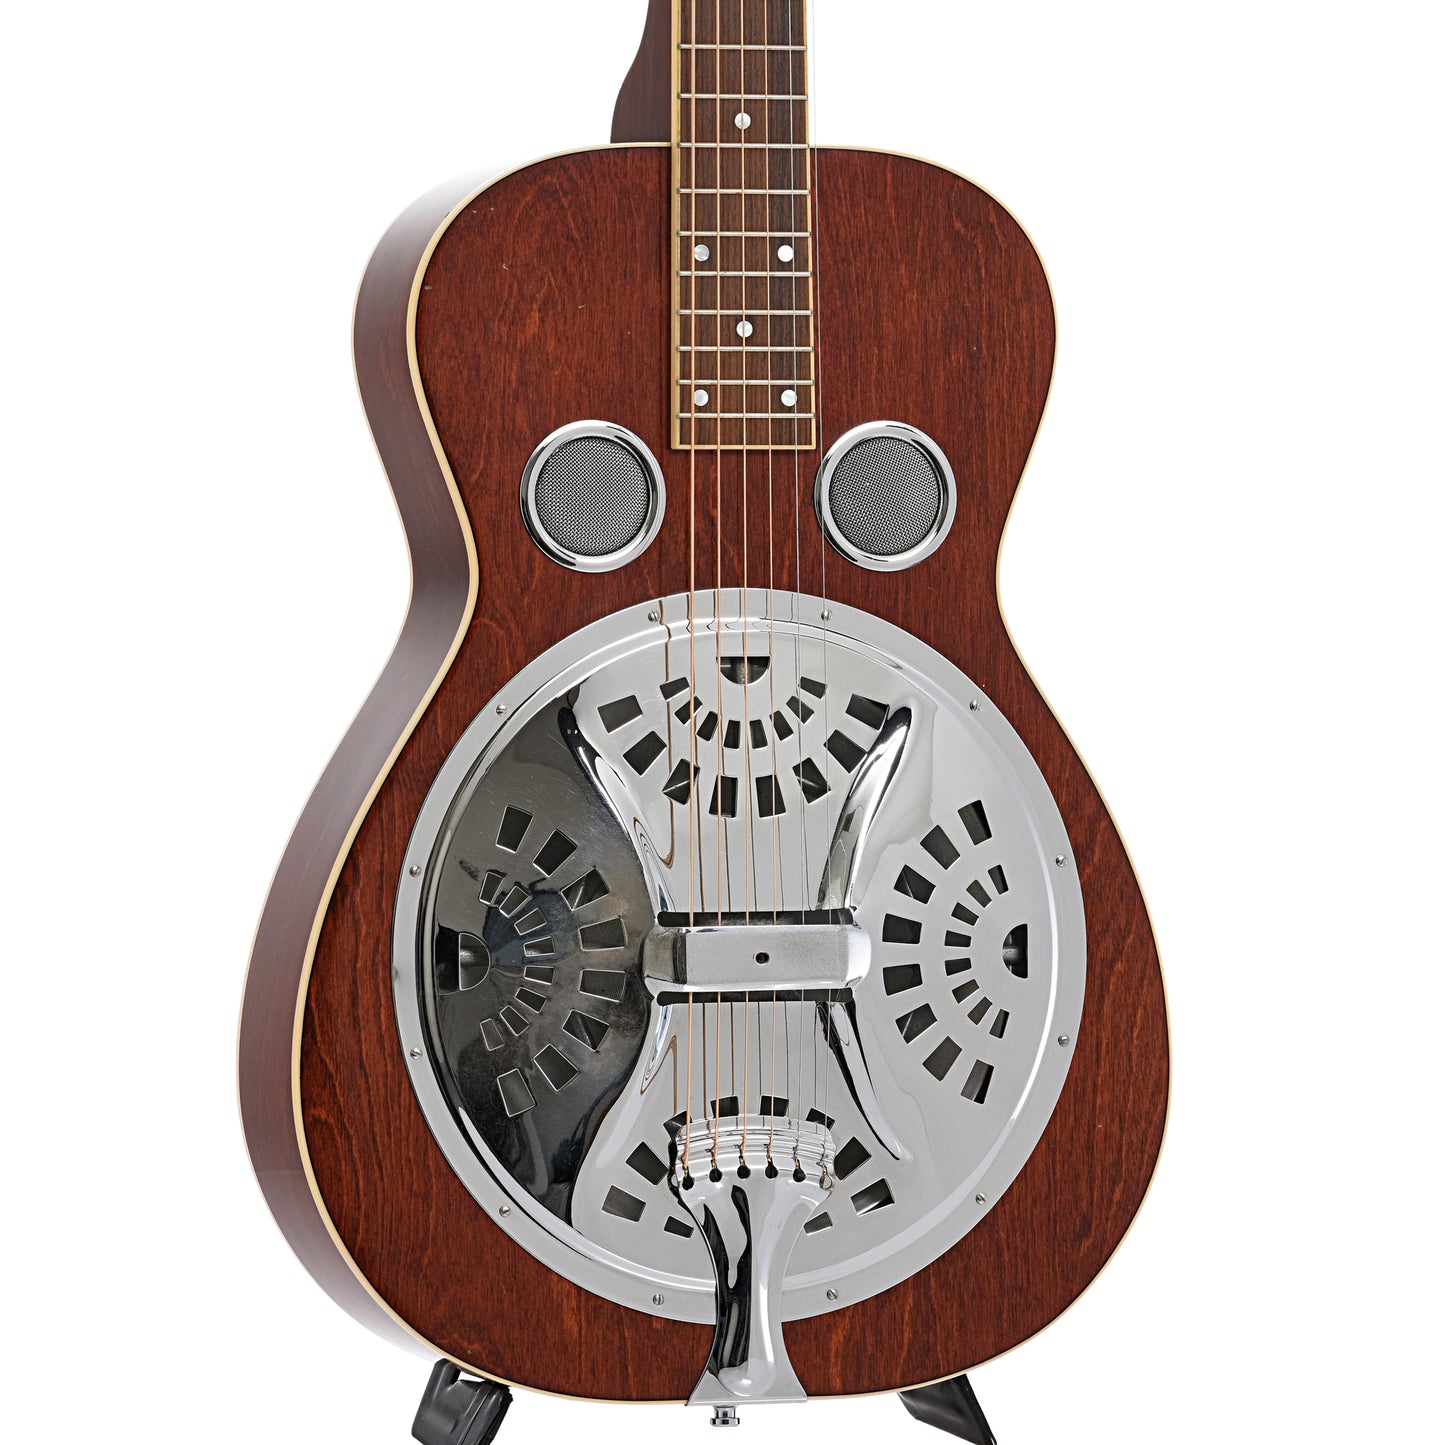 Front and side of Beard Vintage R Squareneck Resonator Guitar